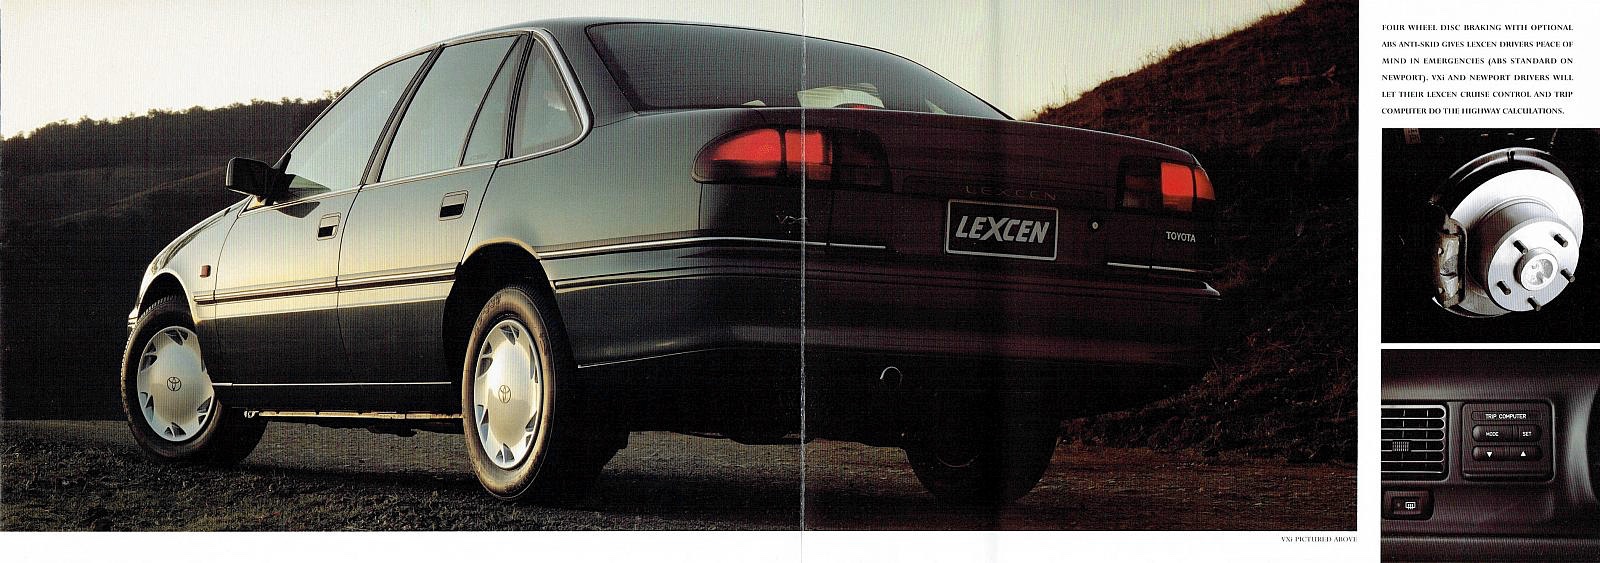 1994 Toyota Lexcen Brochure Page 5